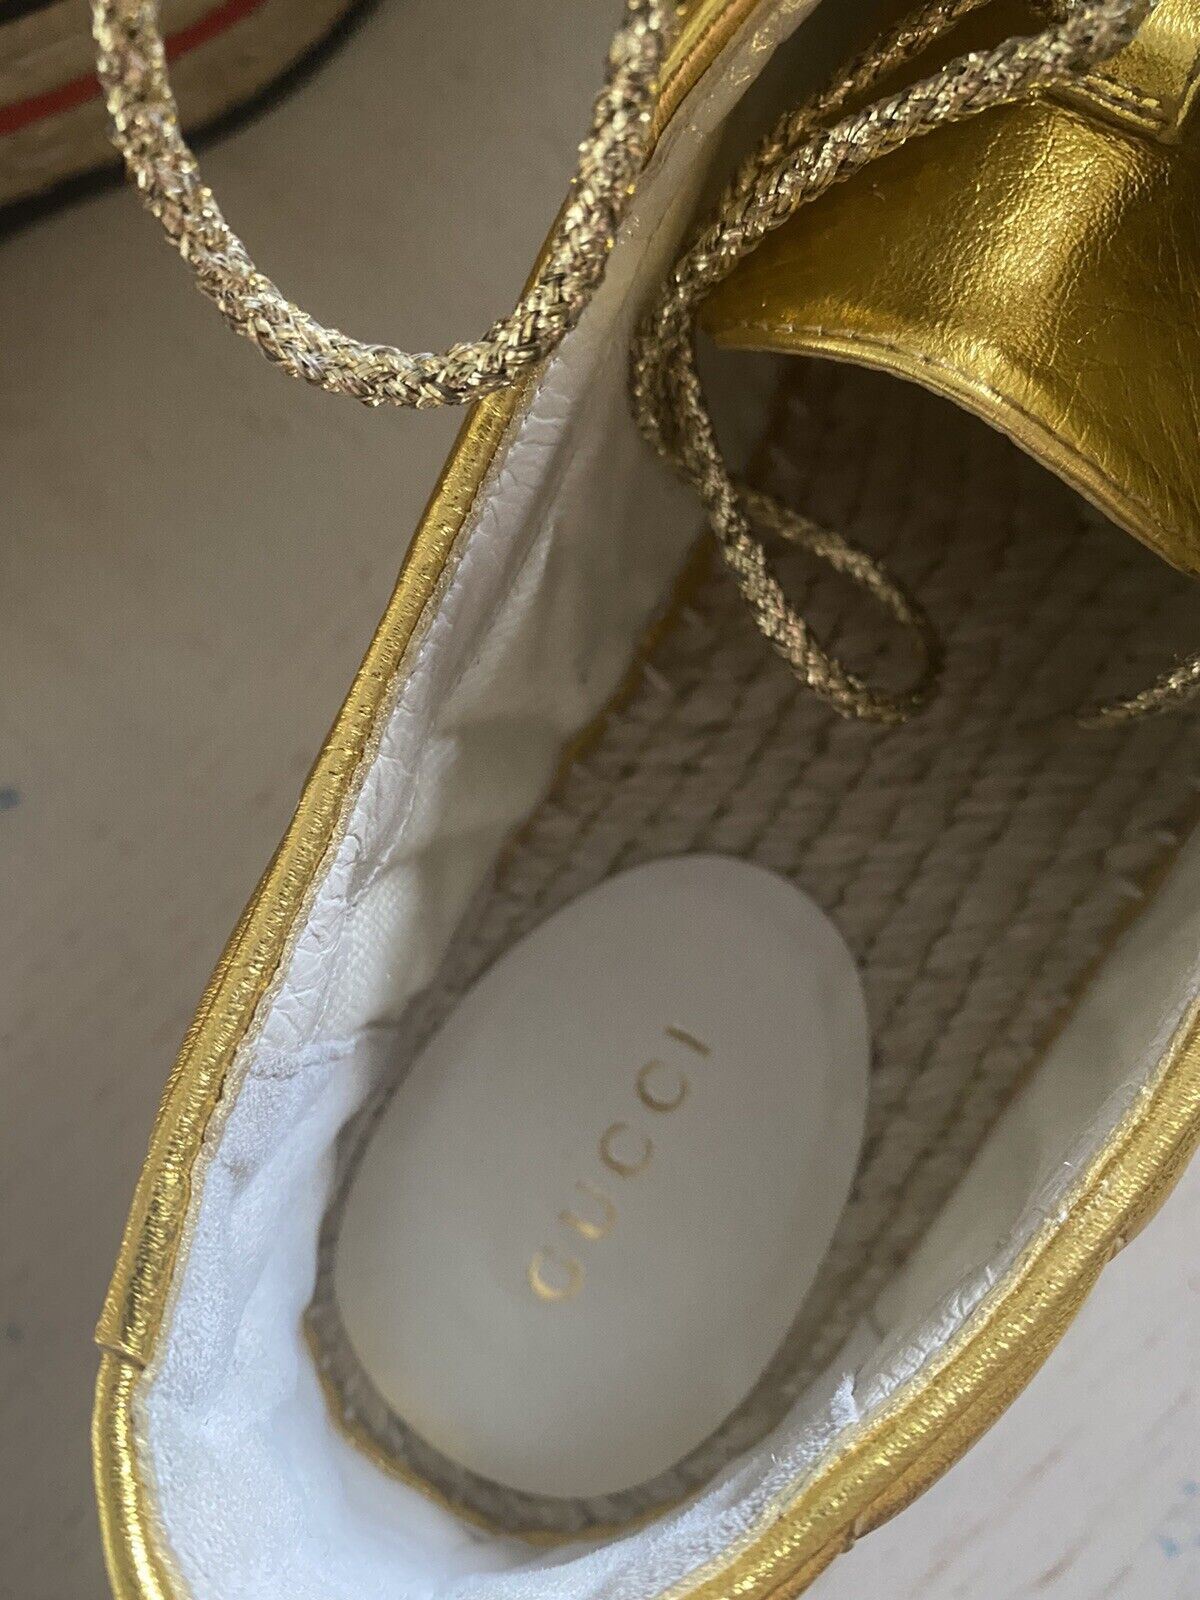 NIB $ 1500 Gucci Damen Leder GG Espadrille-Schuhe Gold 6 US/37 Eu